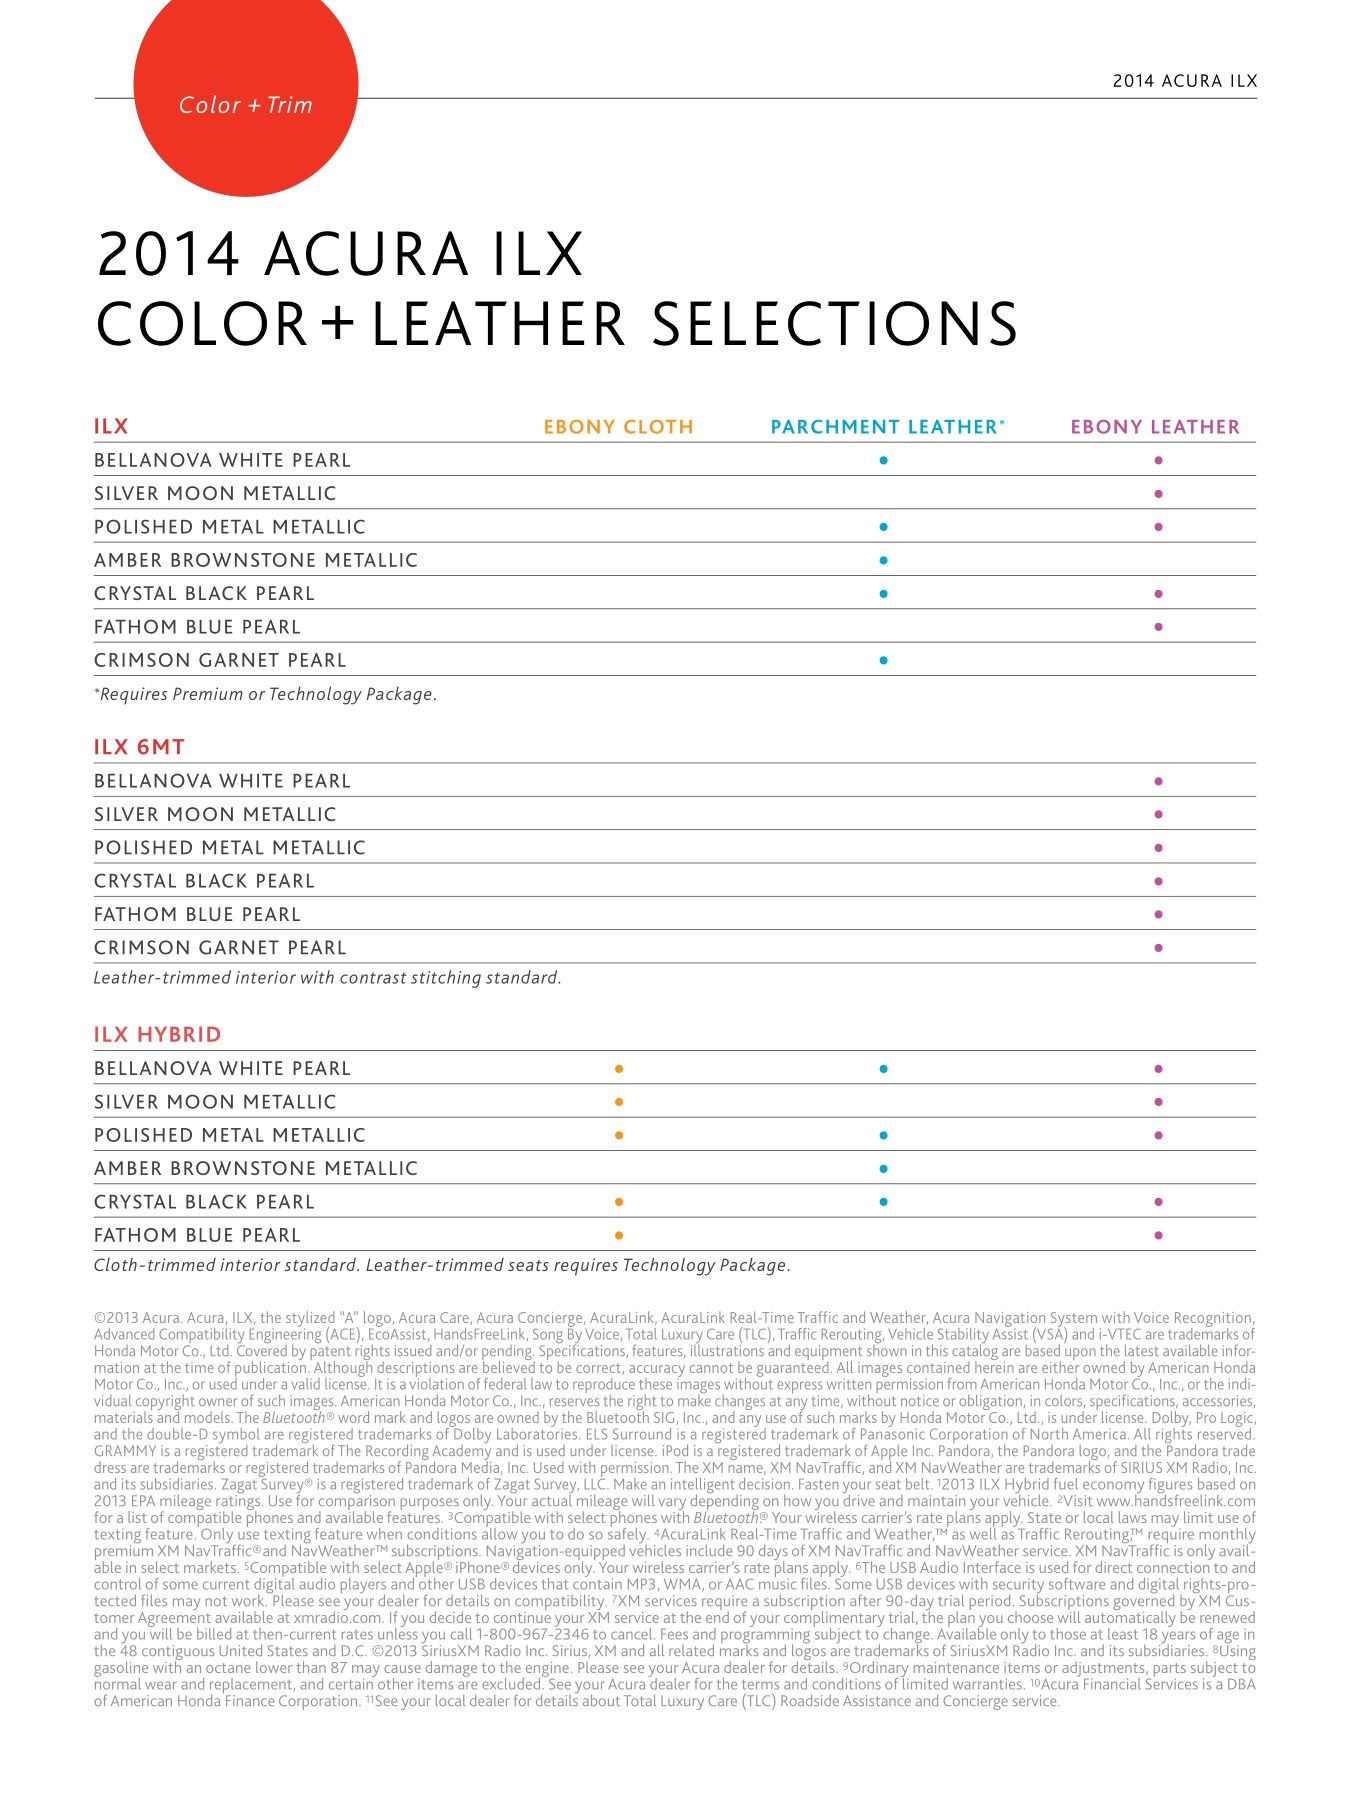 2014 Acura ILX Brochure Page 28